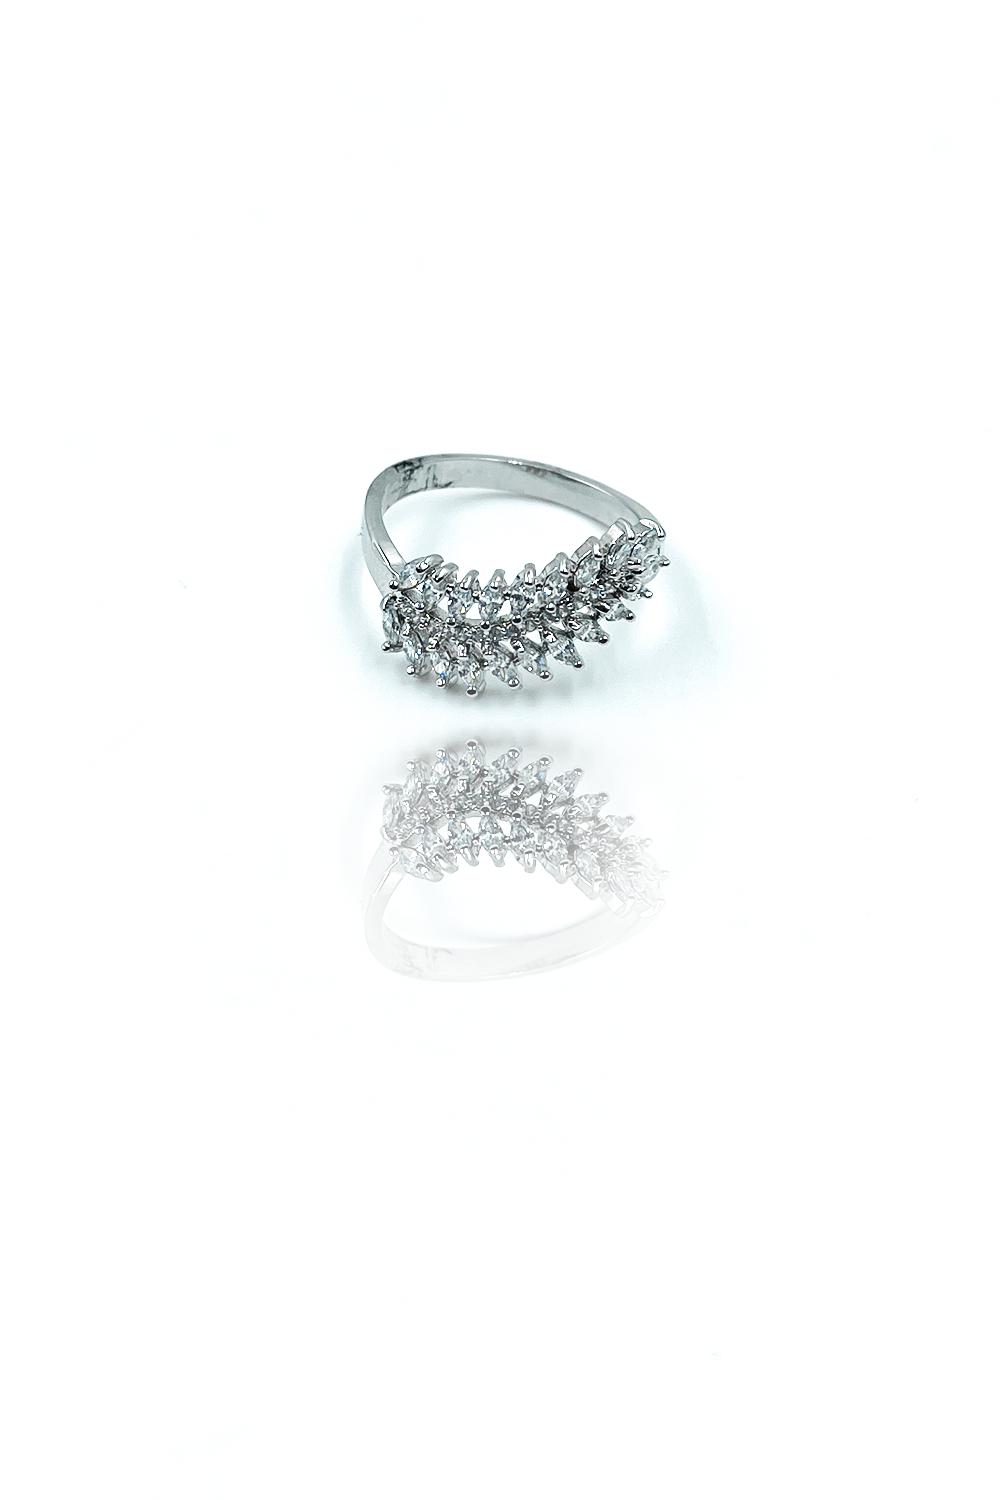 American Diamond Silver Ring.